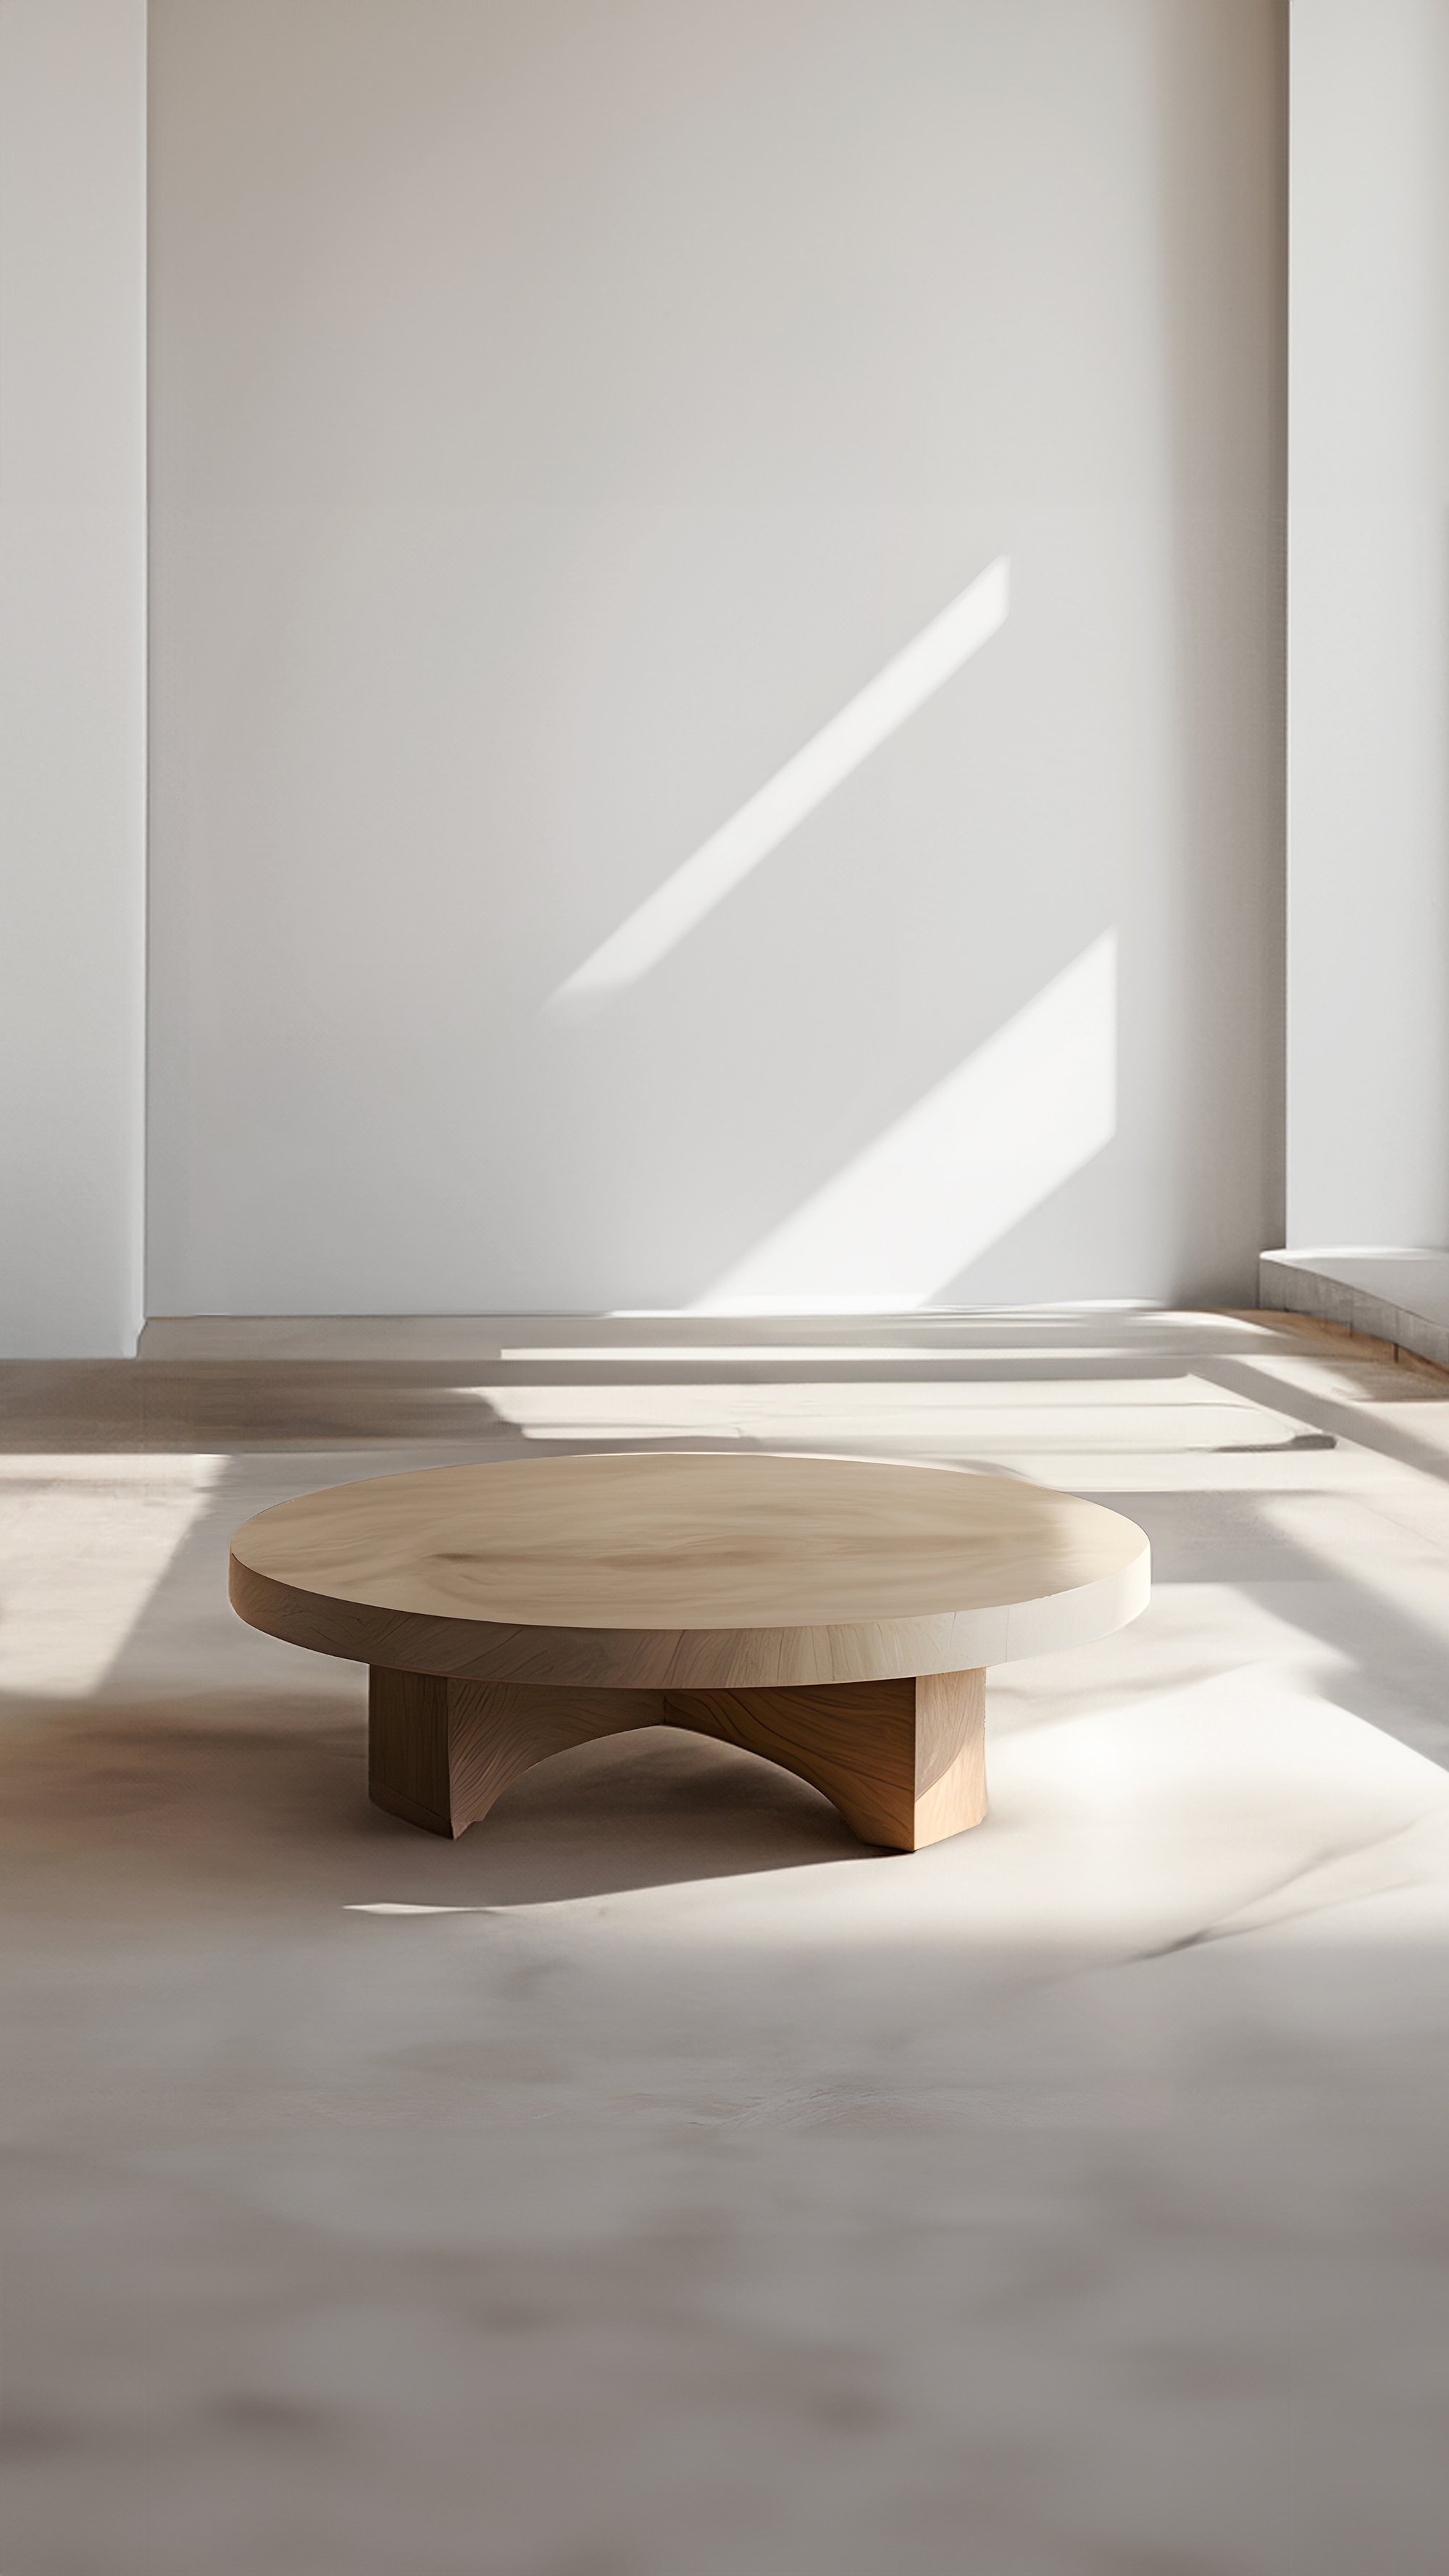 Minimalist Natural Oak Coffee Table - Zen Fundamenta 38 by NONO —5.jpg